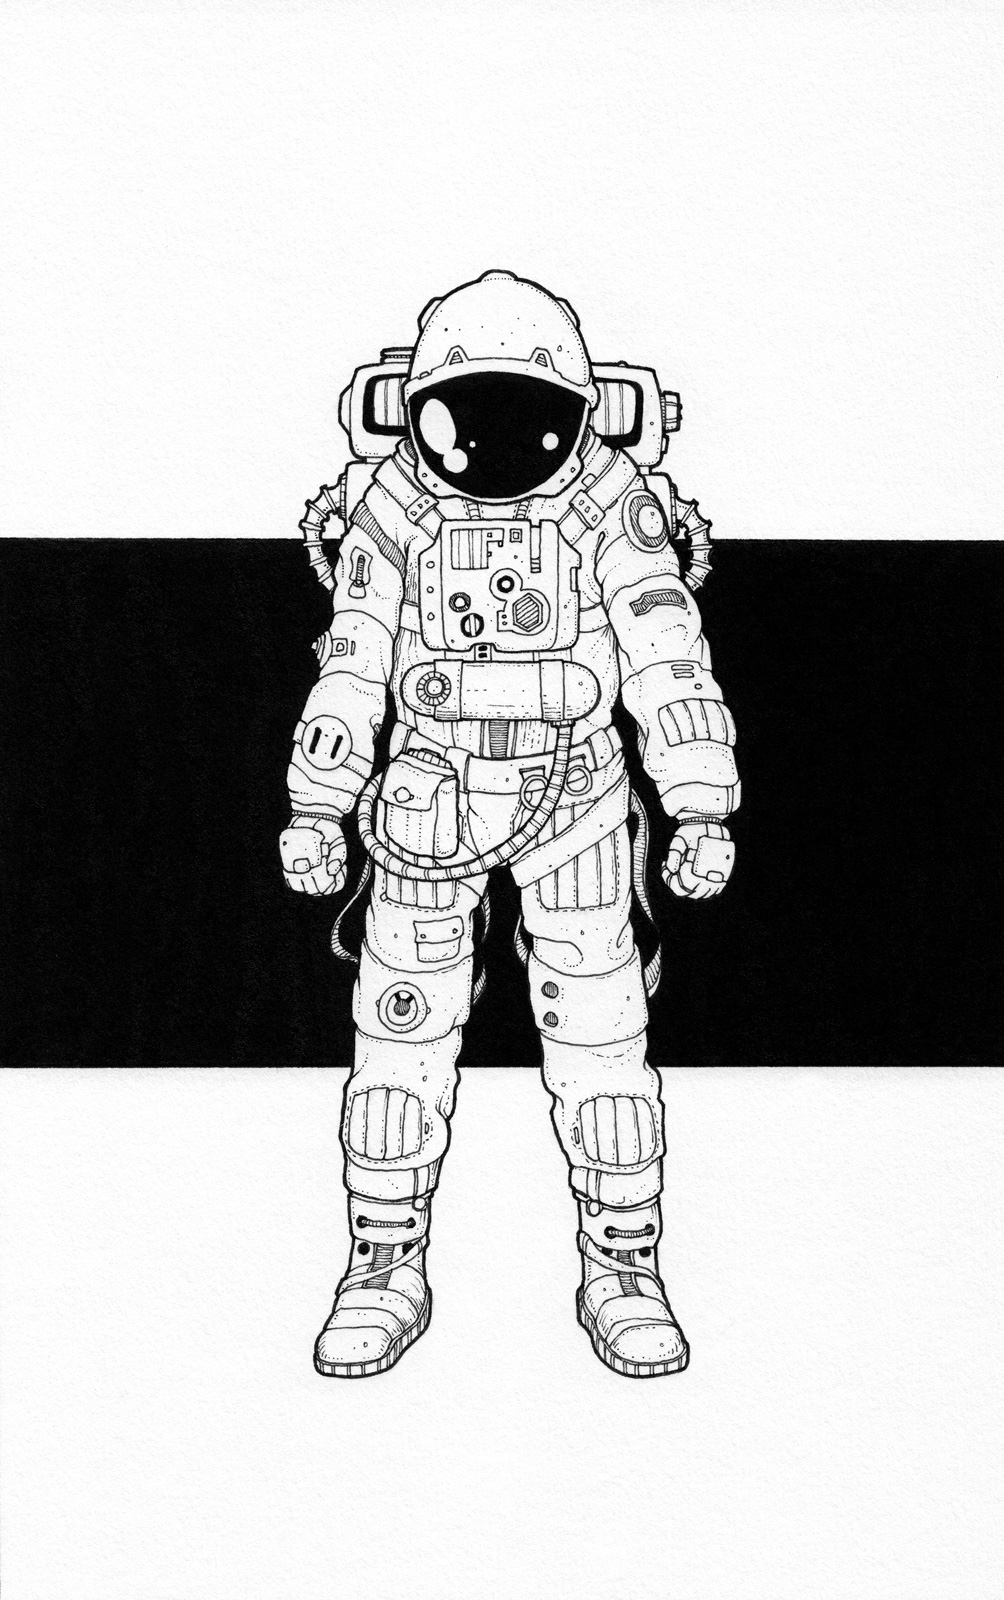 Impressive Wallpaper - X 3141791321 - - Astronaut Space Suit Drawing - HD Wallpaper 